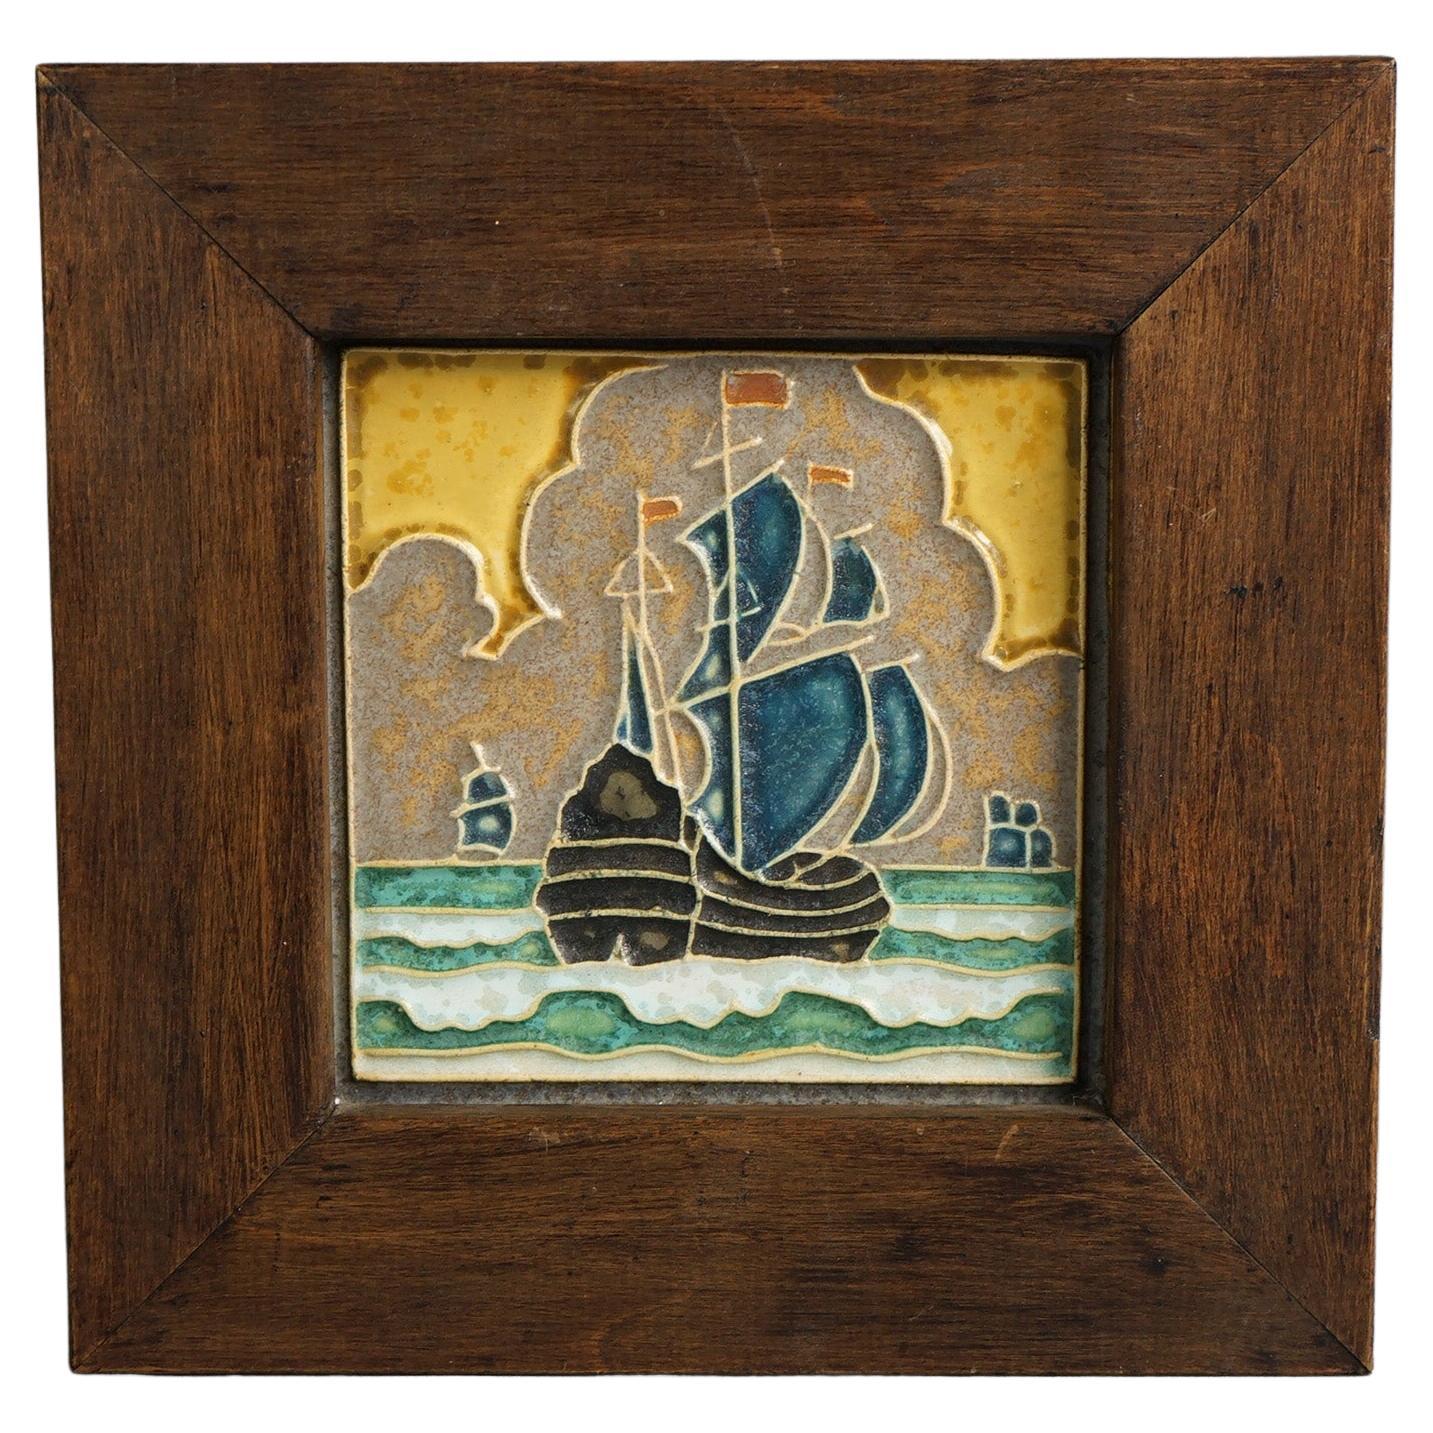 Antike Delft Arts & Craft gerahmte Keramikfliese, Seelandschaft & Schiff, signiert C1920